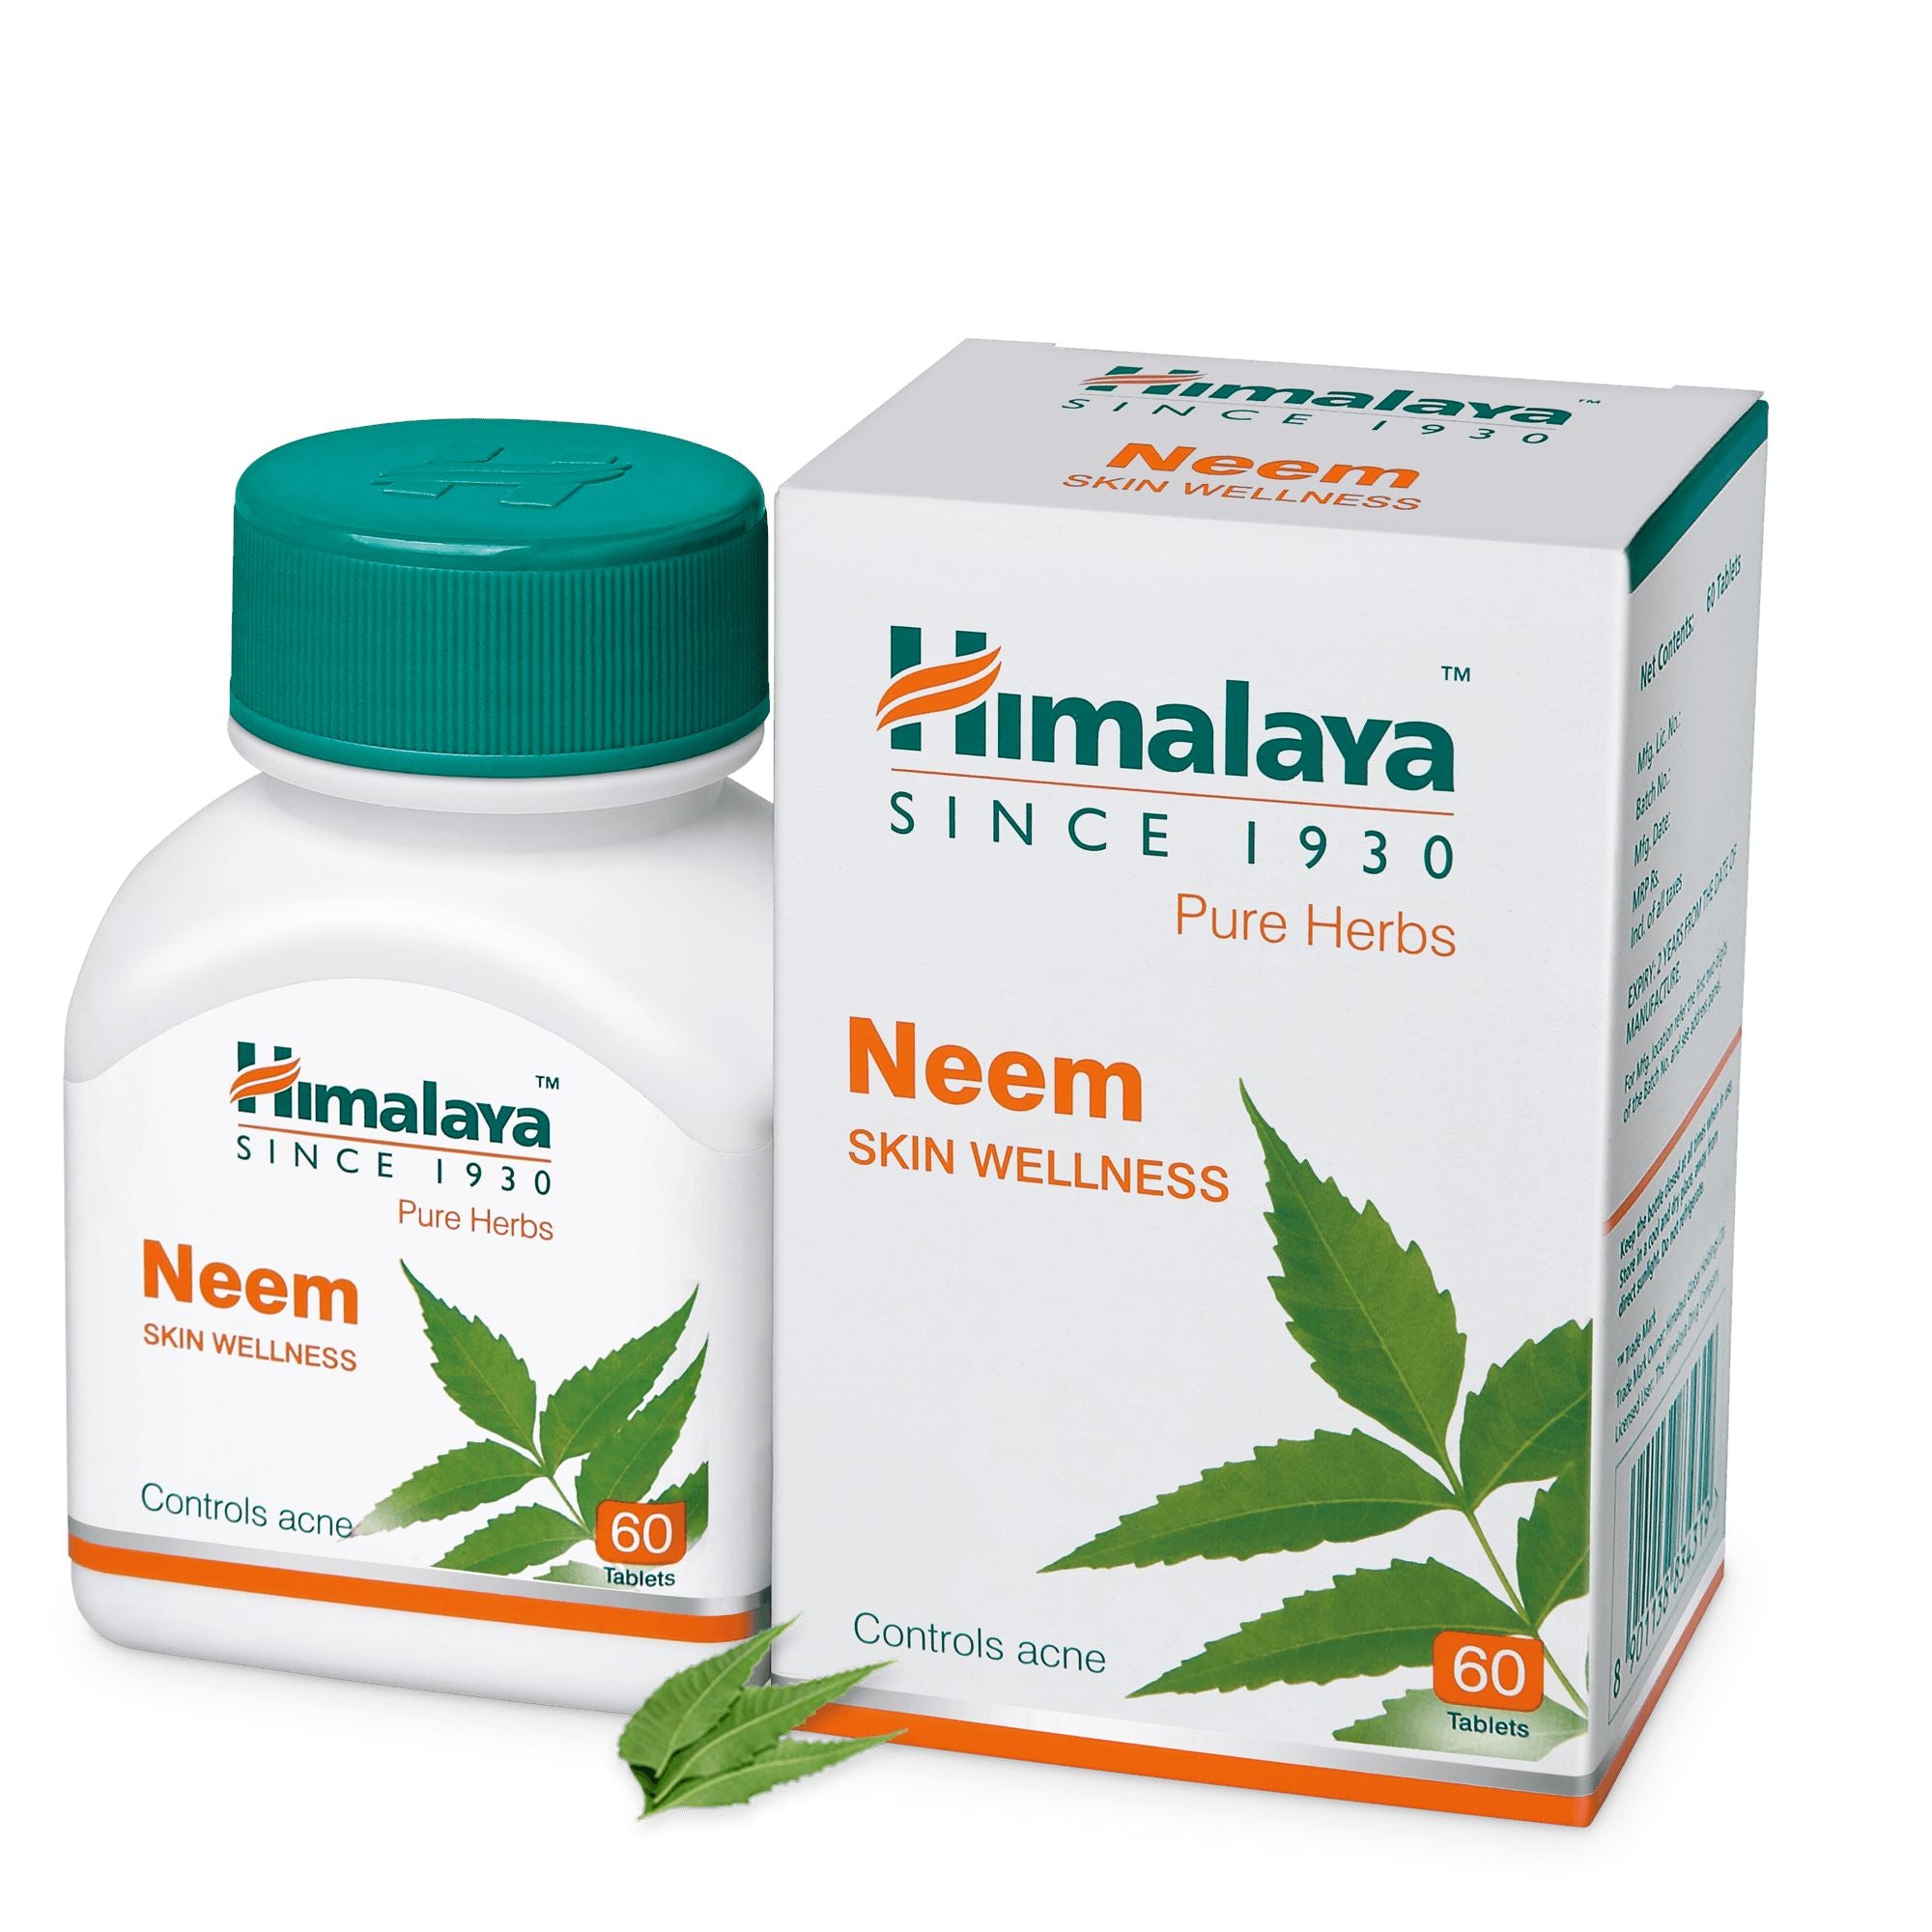 Himalaya Neem - Controls acne